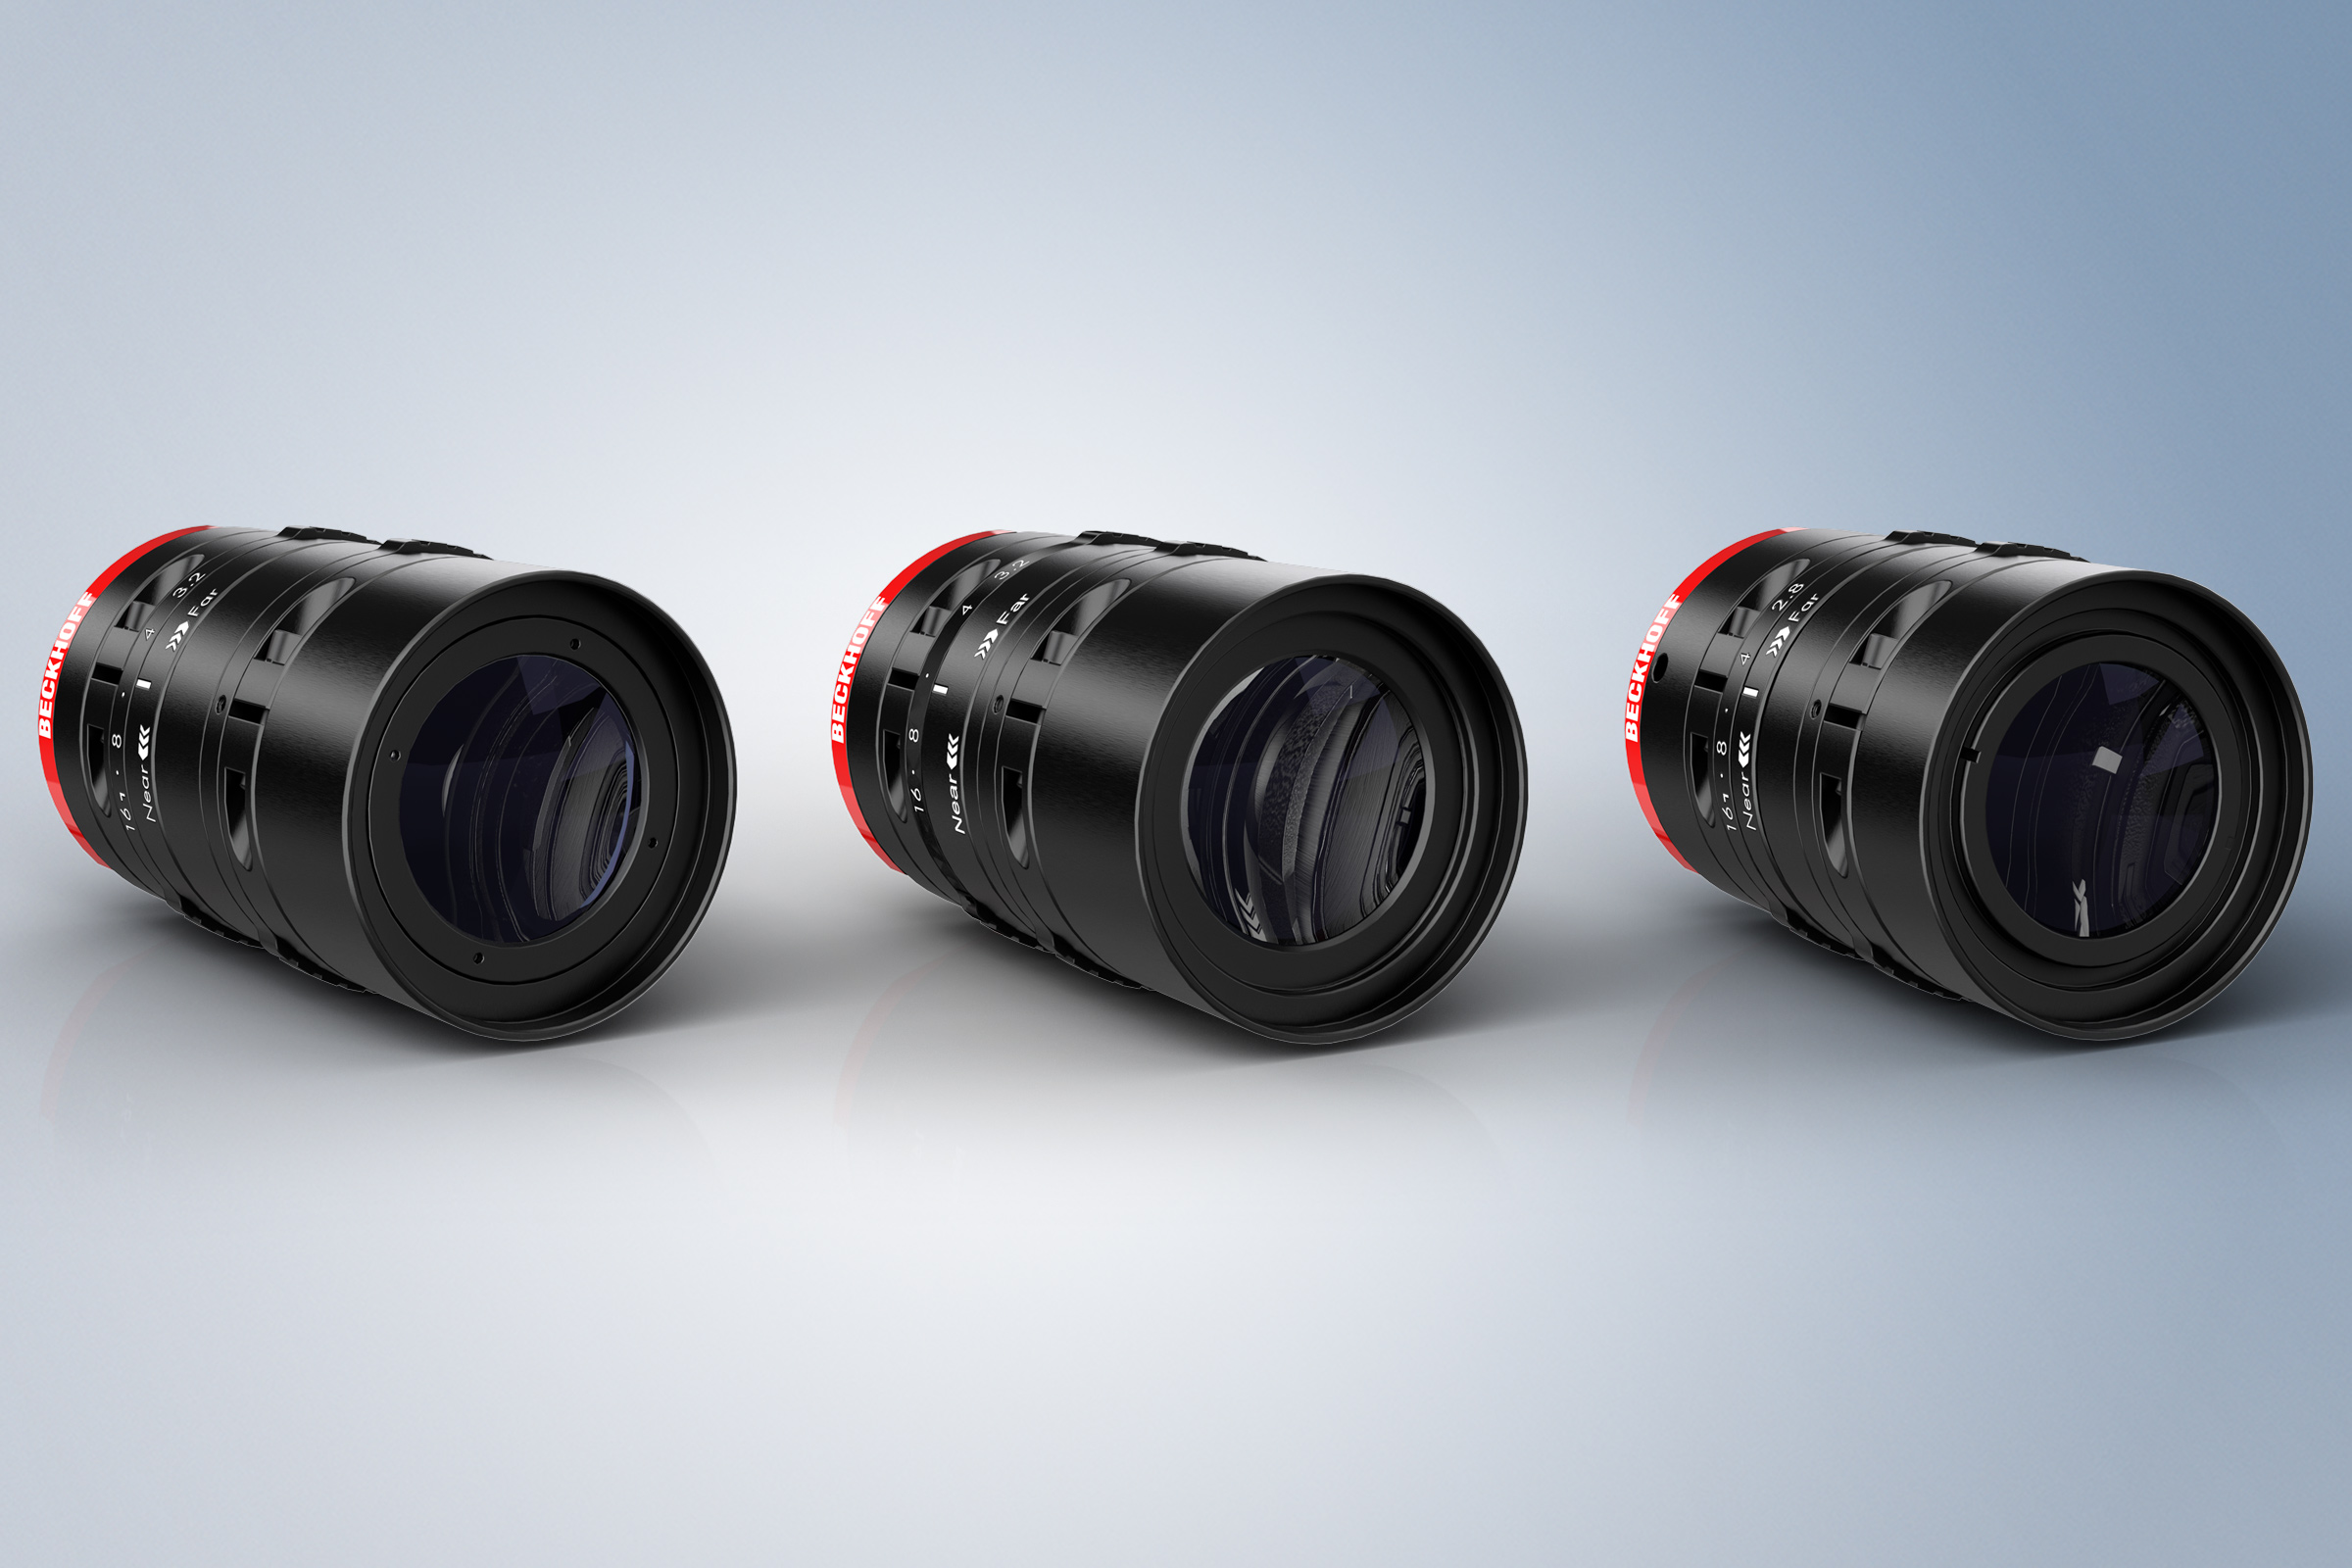 VOS3000 lens series